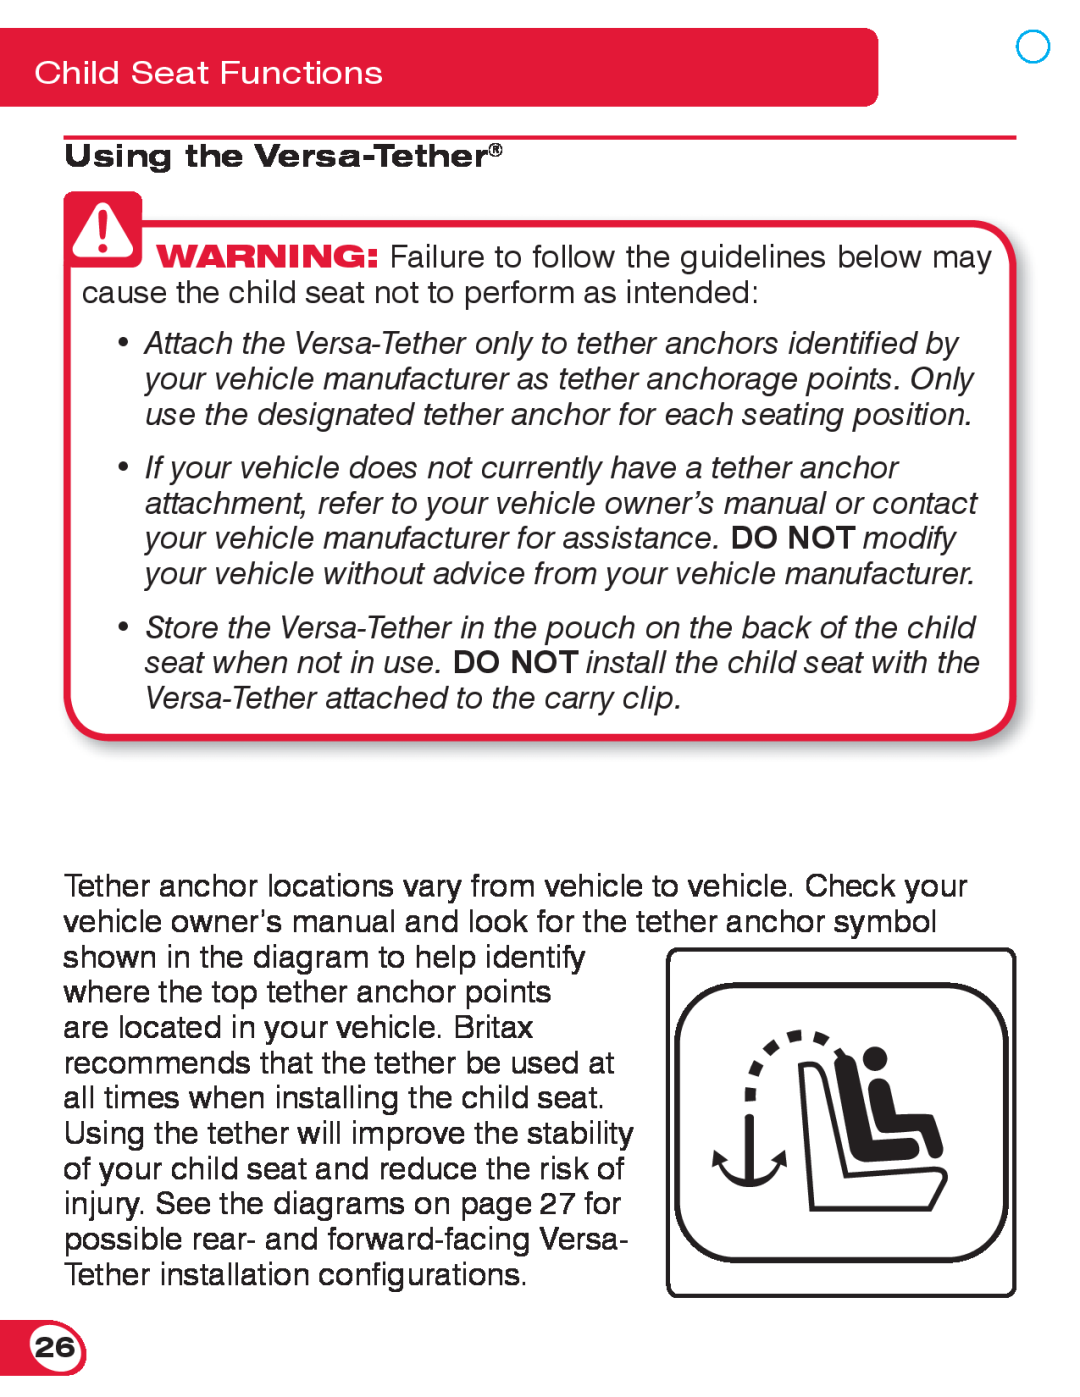 Britax 70 CS manual Using the Versa-Tether, Child Seat Functions 